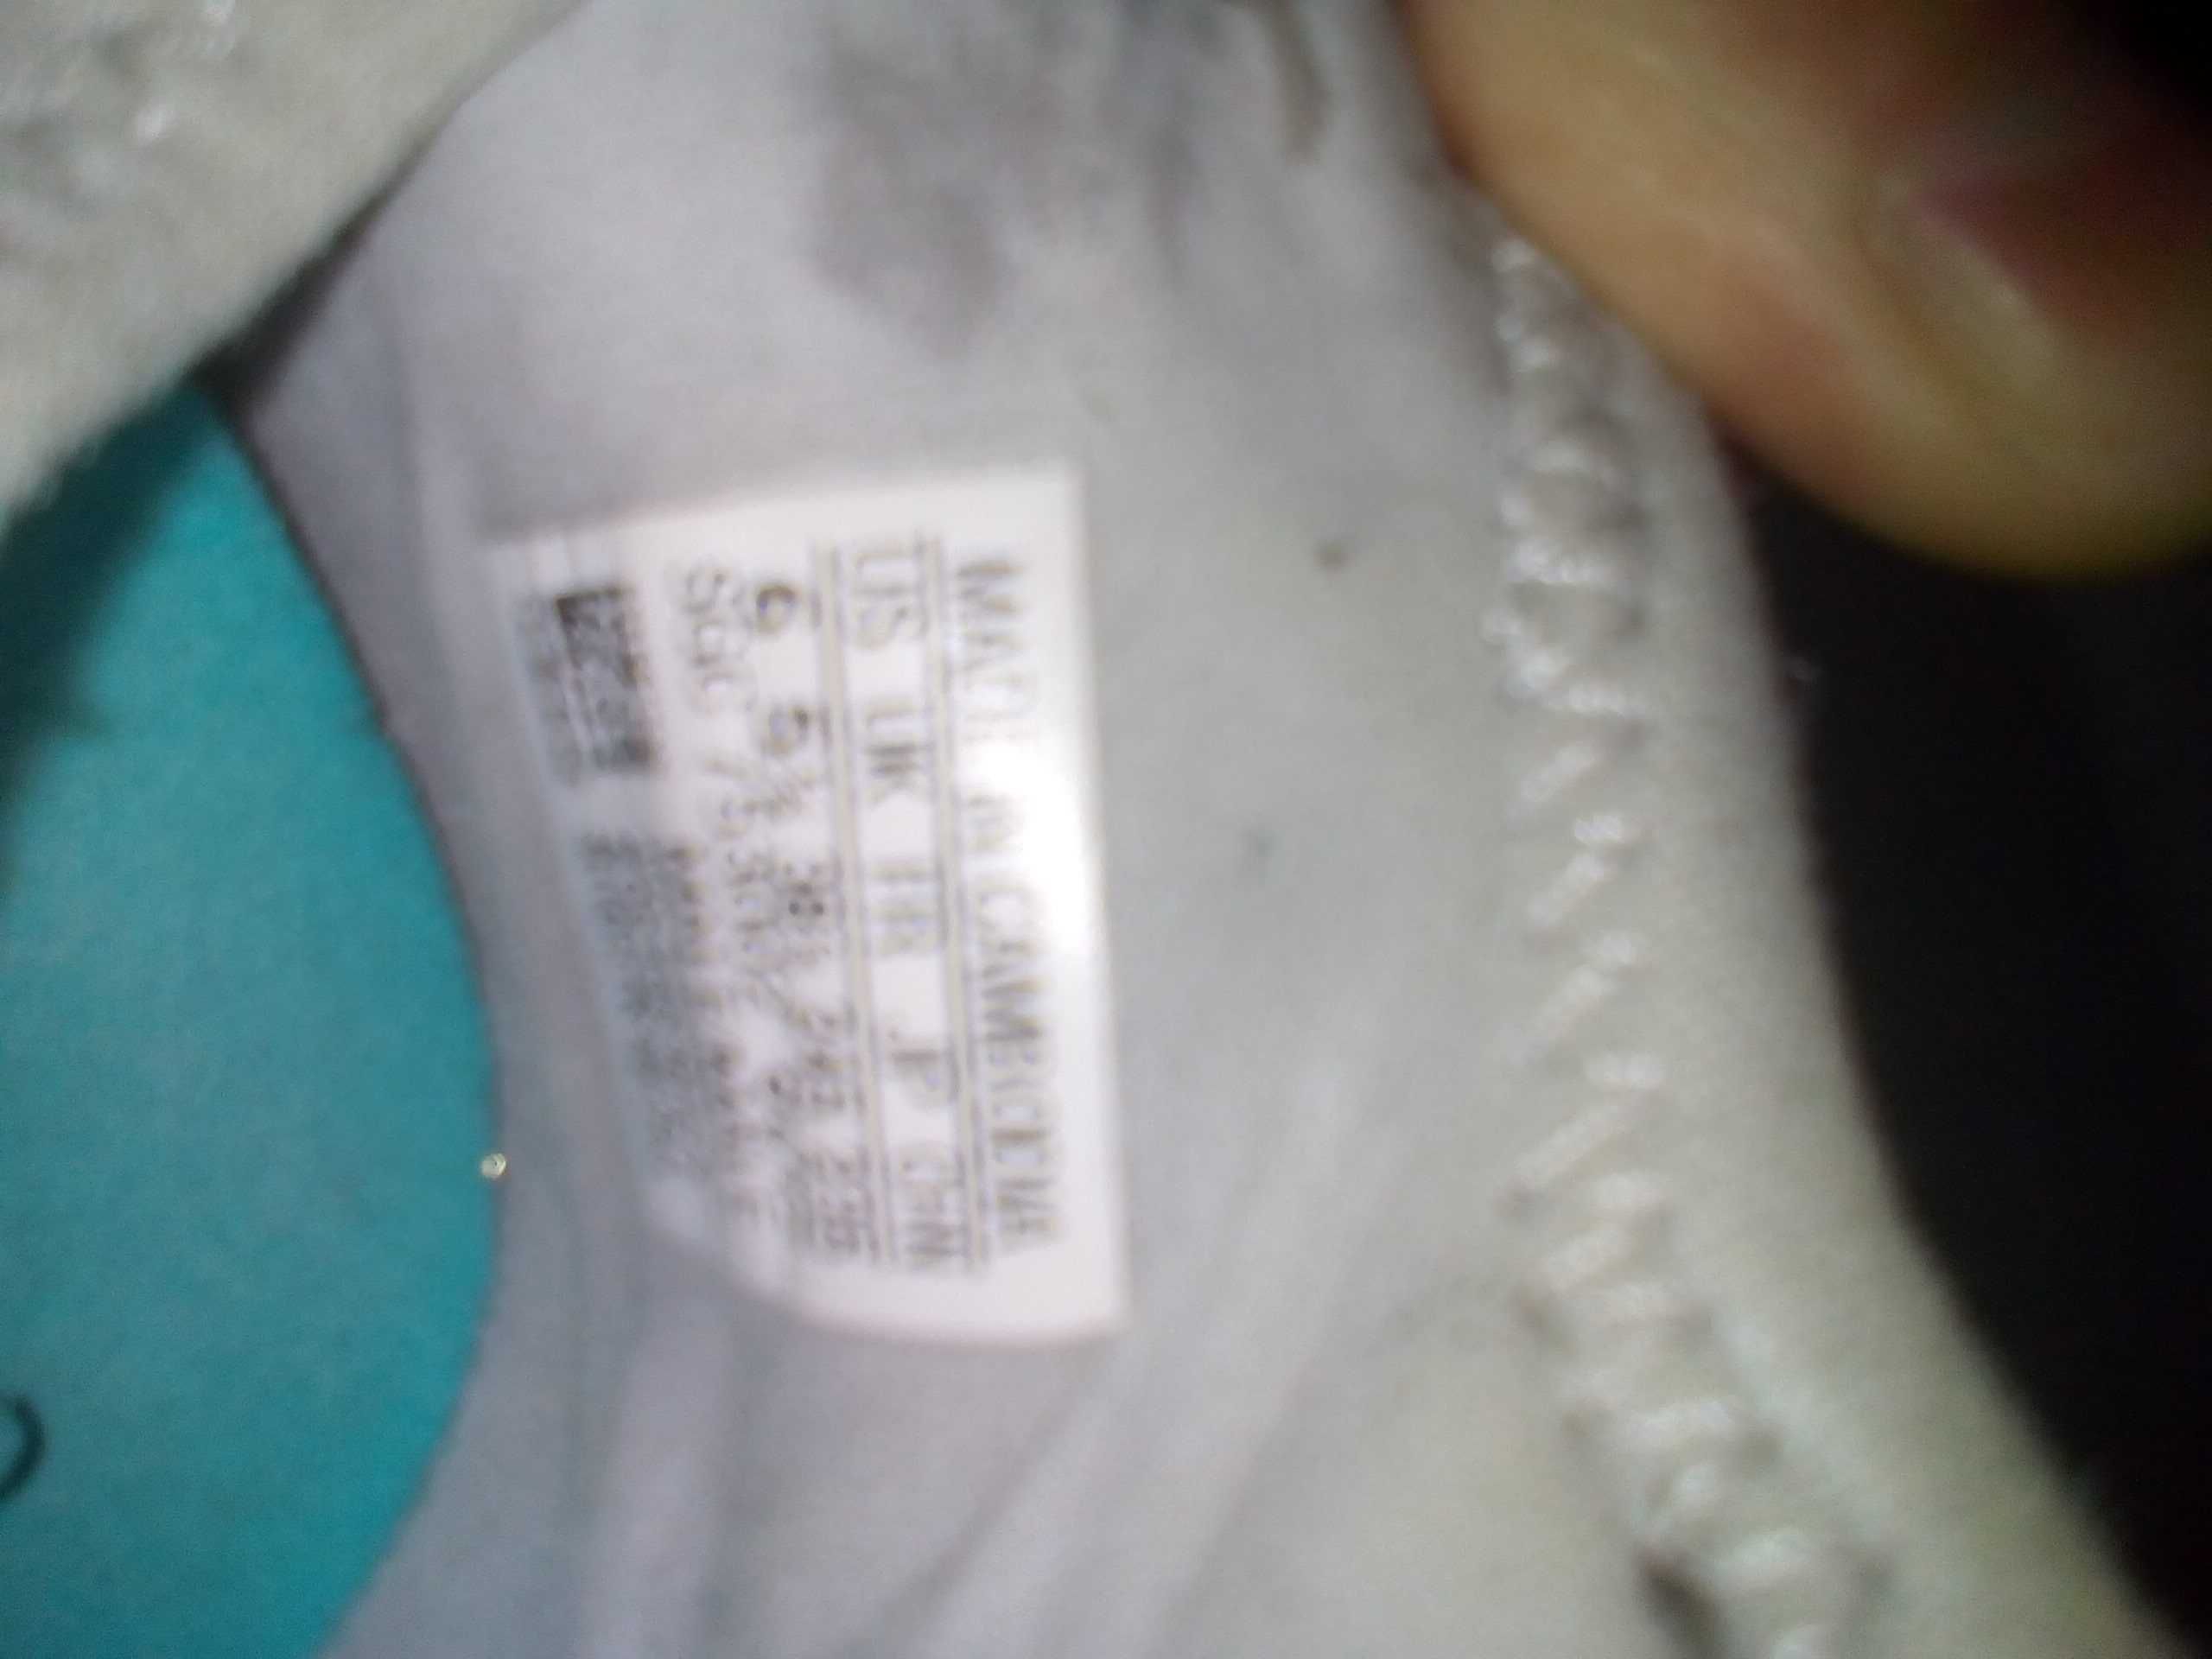 Adidas 17.3 X Бутсы оригинал. Размер 37.5 срочно!!!